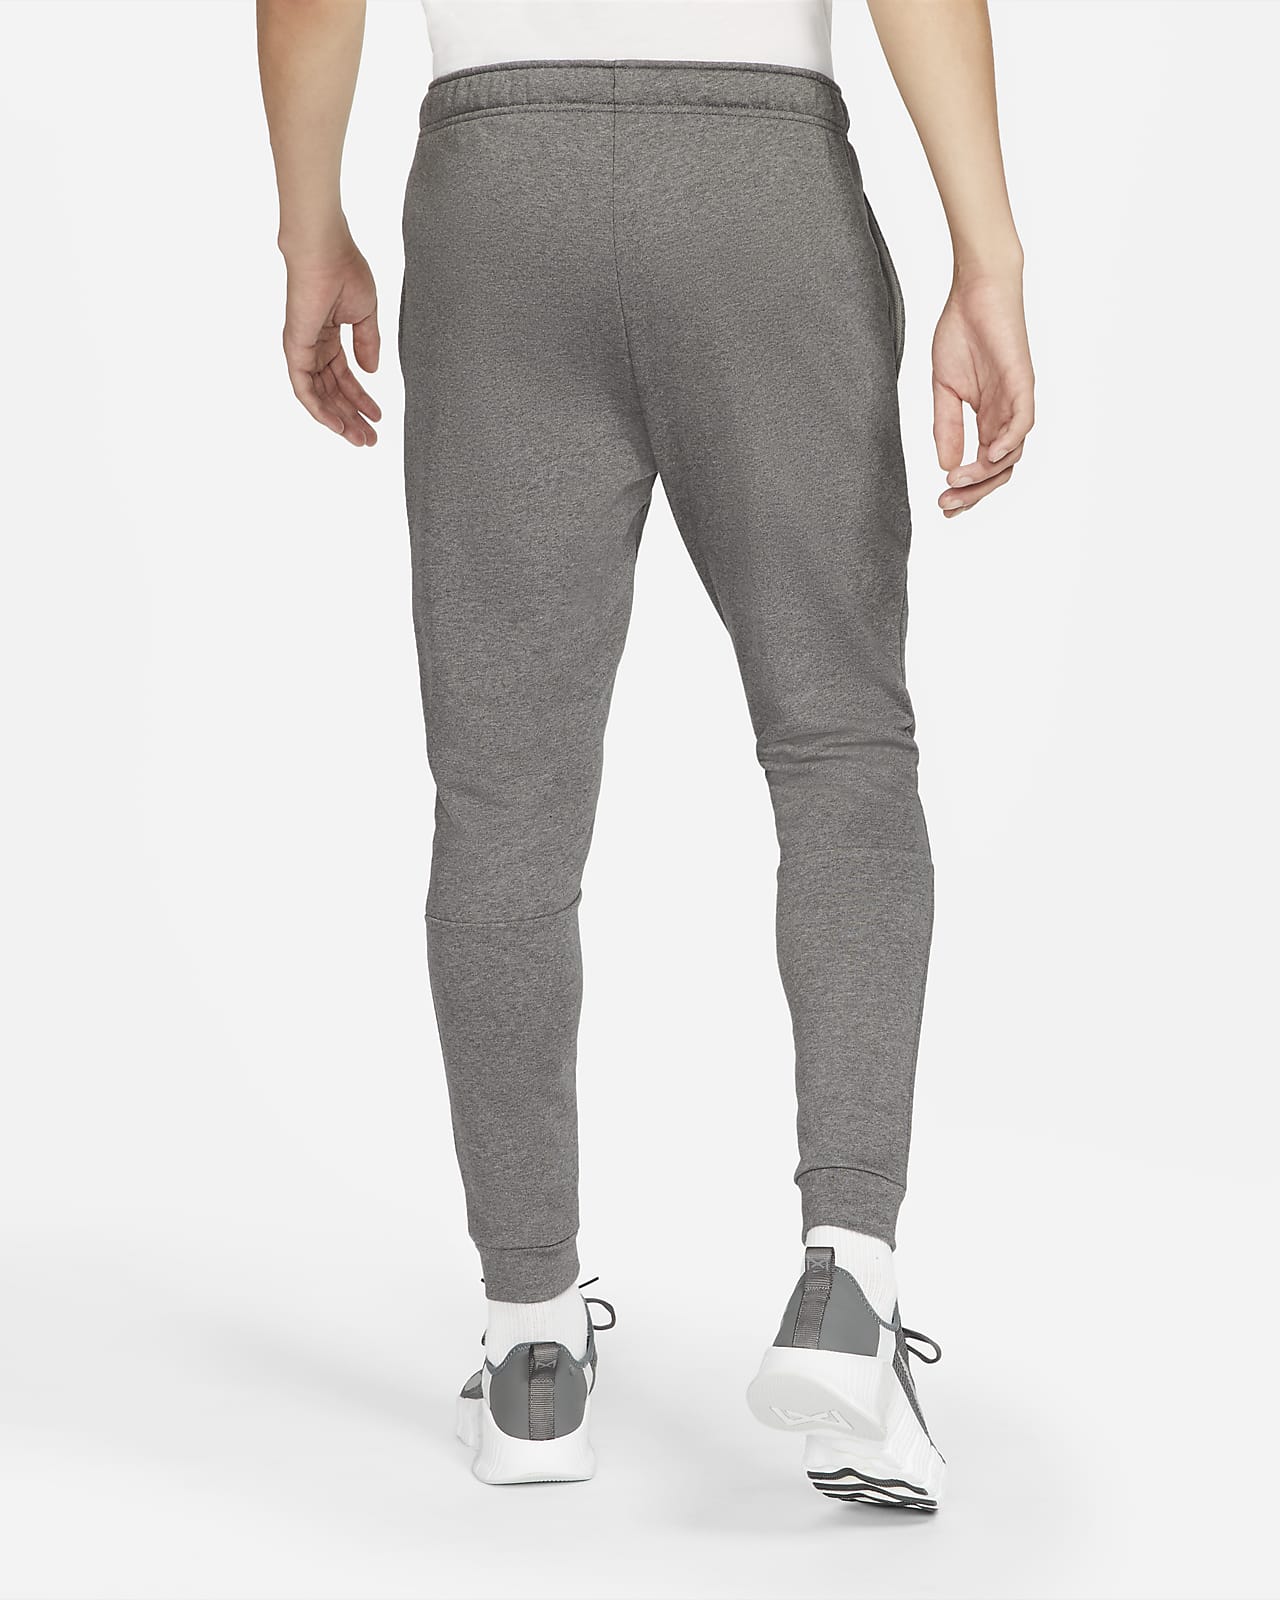 NIKE Tapered Cotton-Blend Tech Fleece Sweatpants for Men